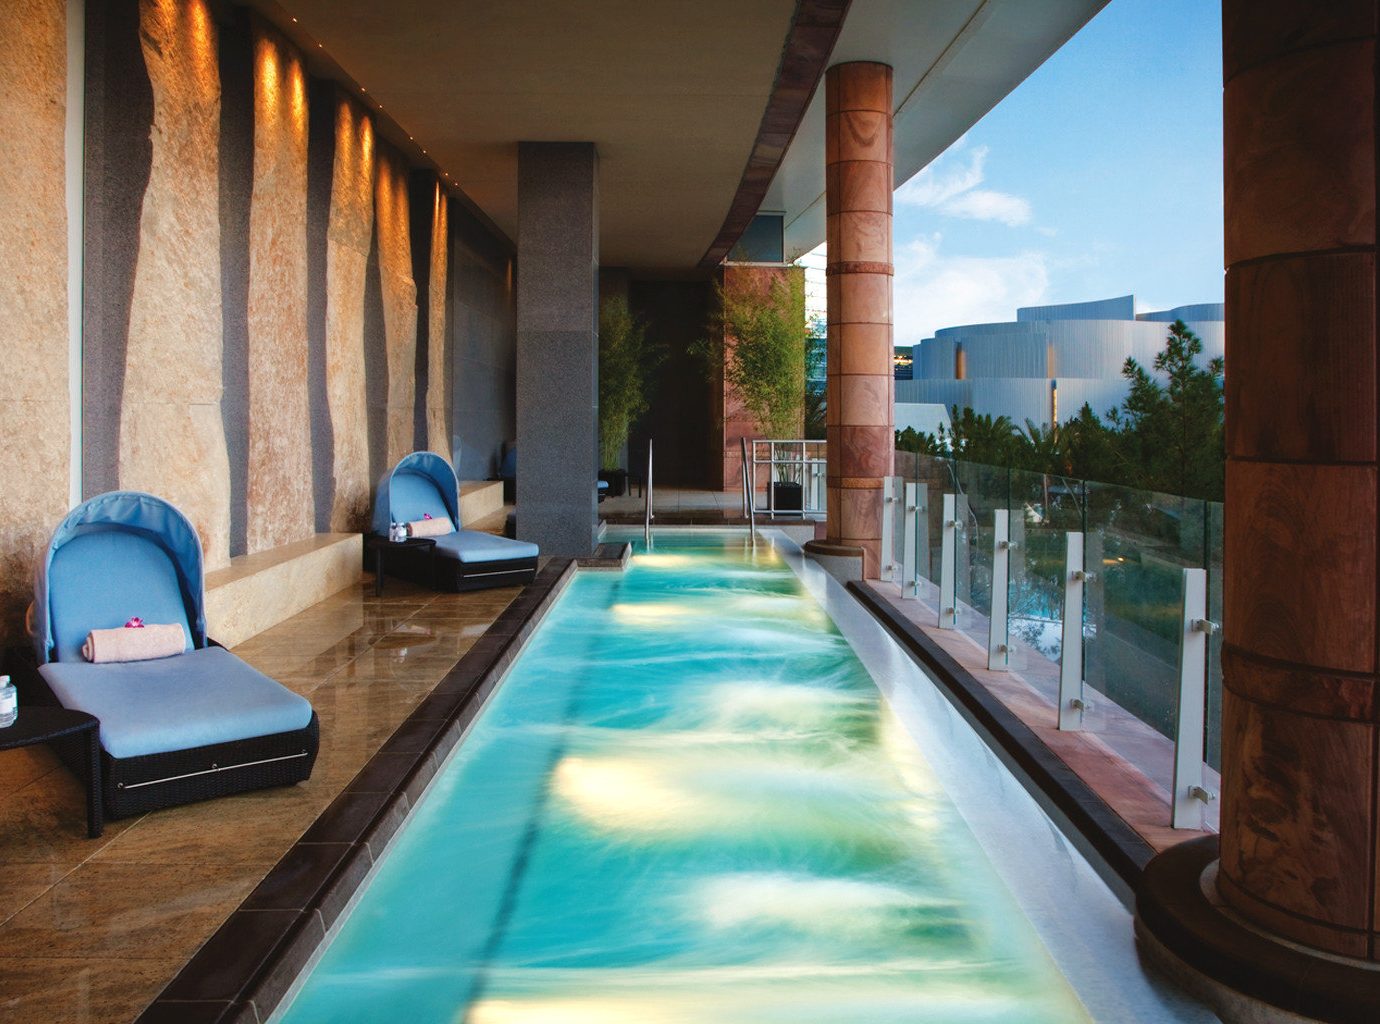 Hotels Living Lounge Luxury Modern Pool Romance Trip Ideas swimming pool leisure property Resort estate vacation condominium interior design Villa mansion furniture